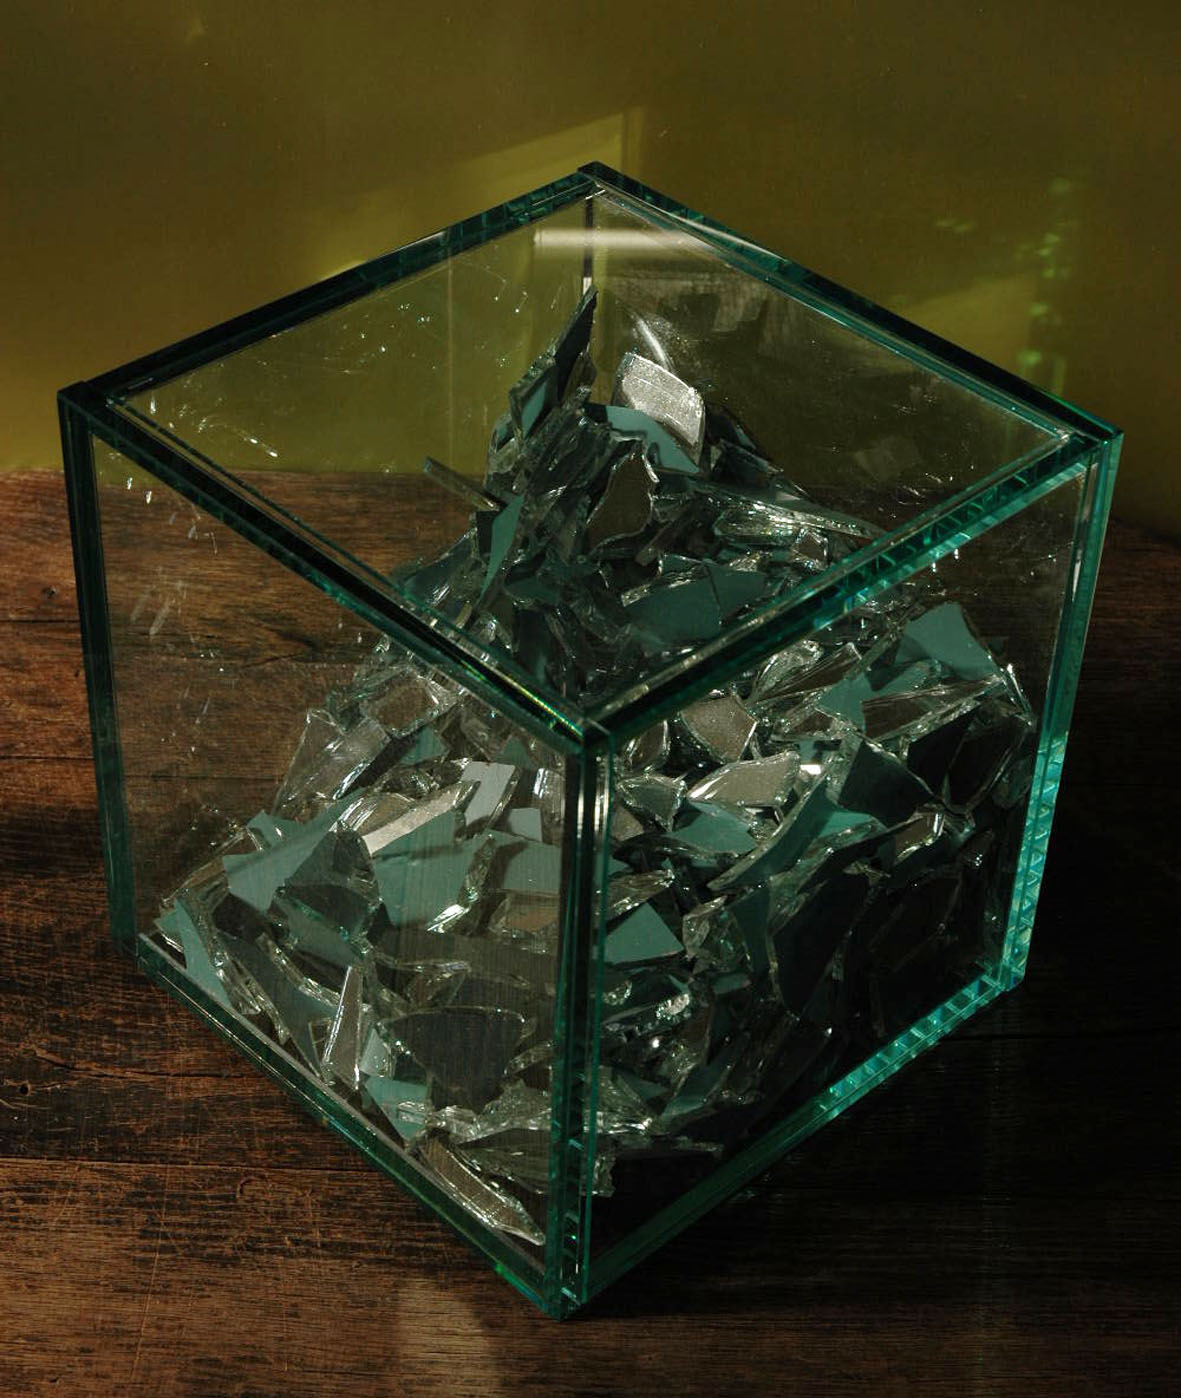   (Kader Attia).  . Untitled (Glass Cube), 2006